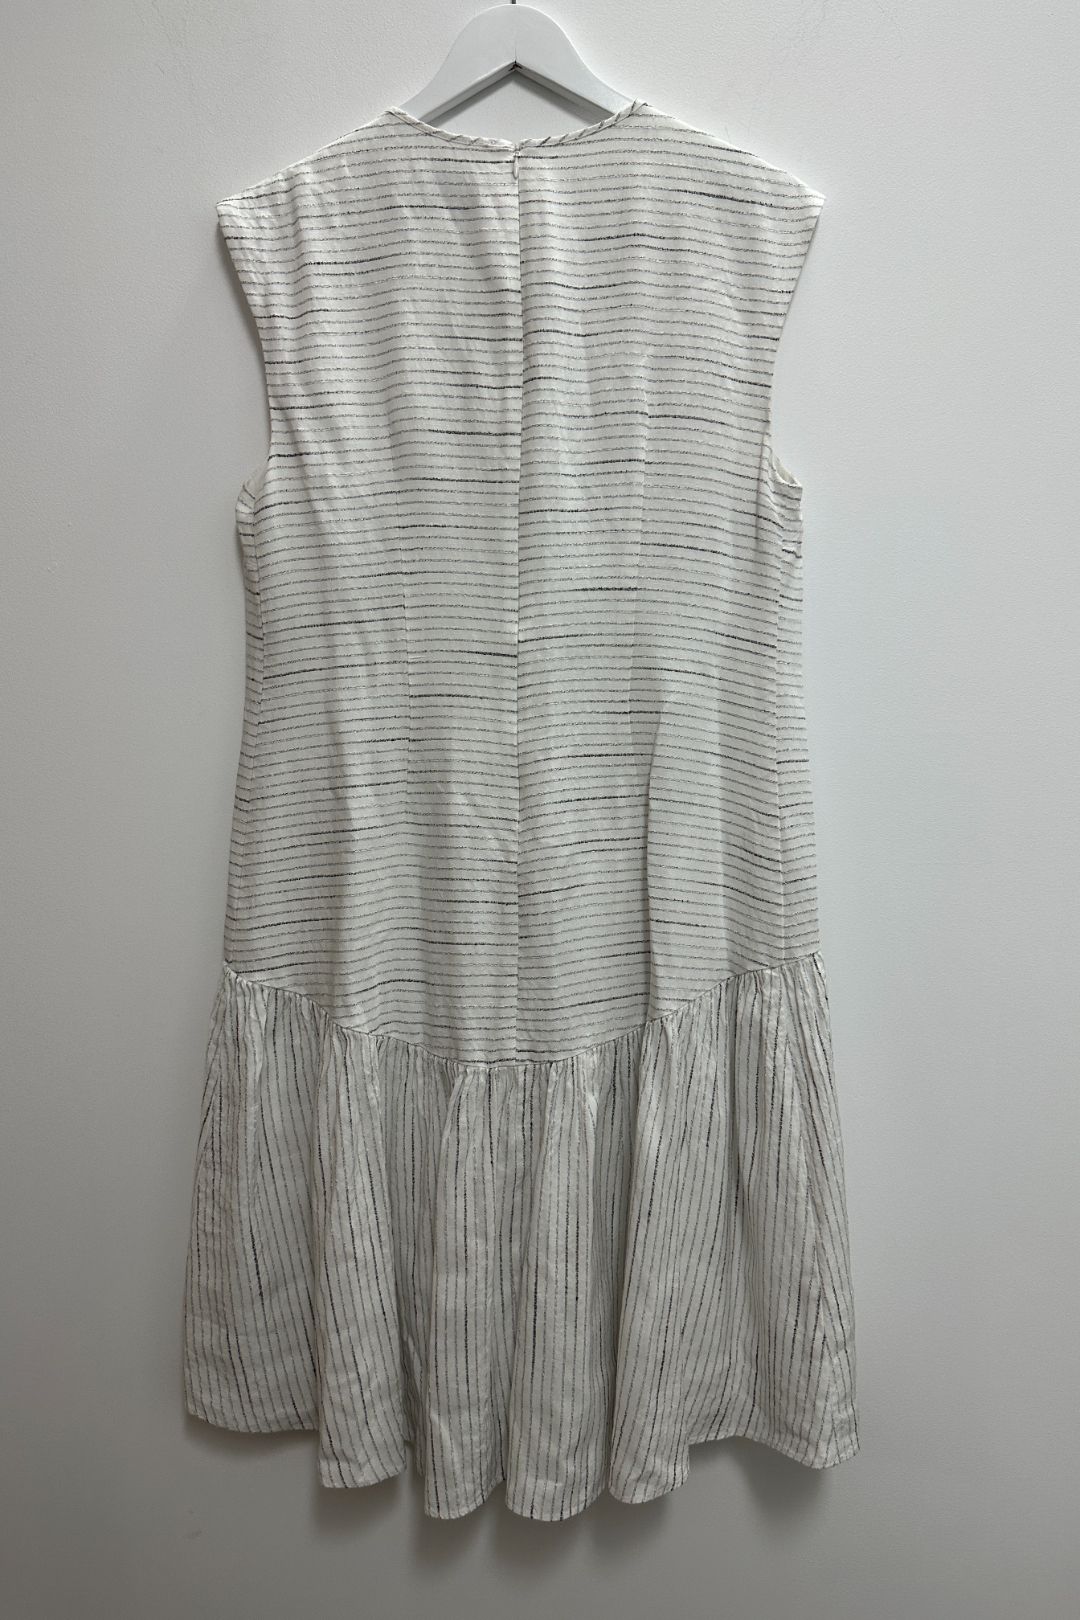 Veronika Maine - Black and White Dropped Waist Striped Dress